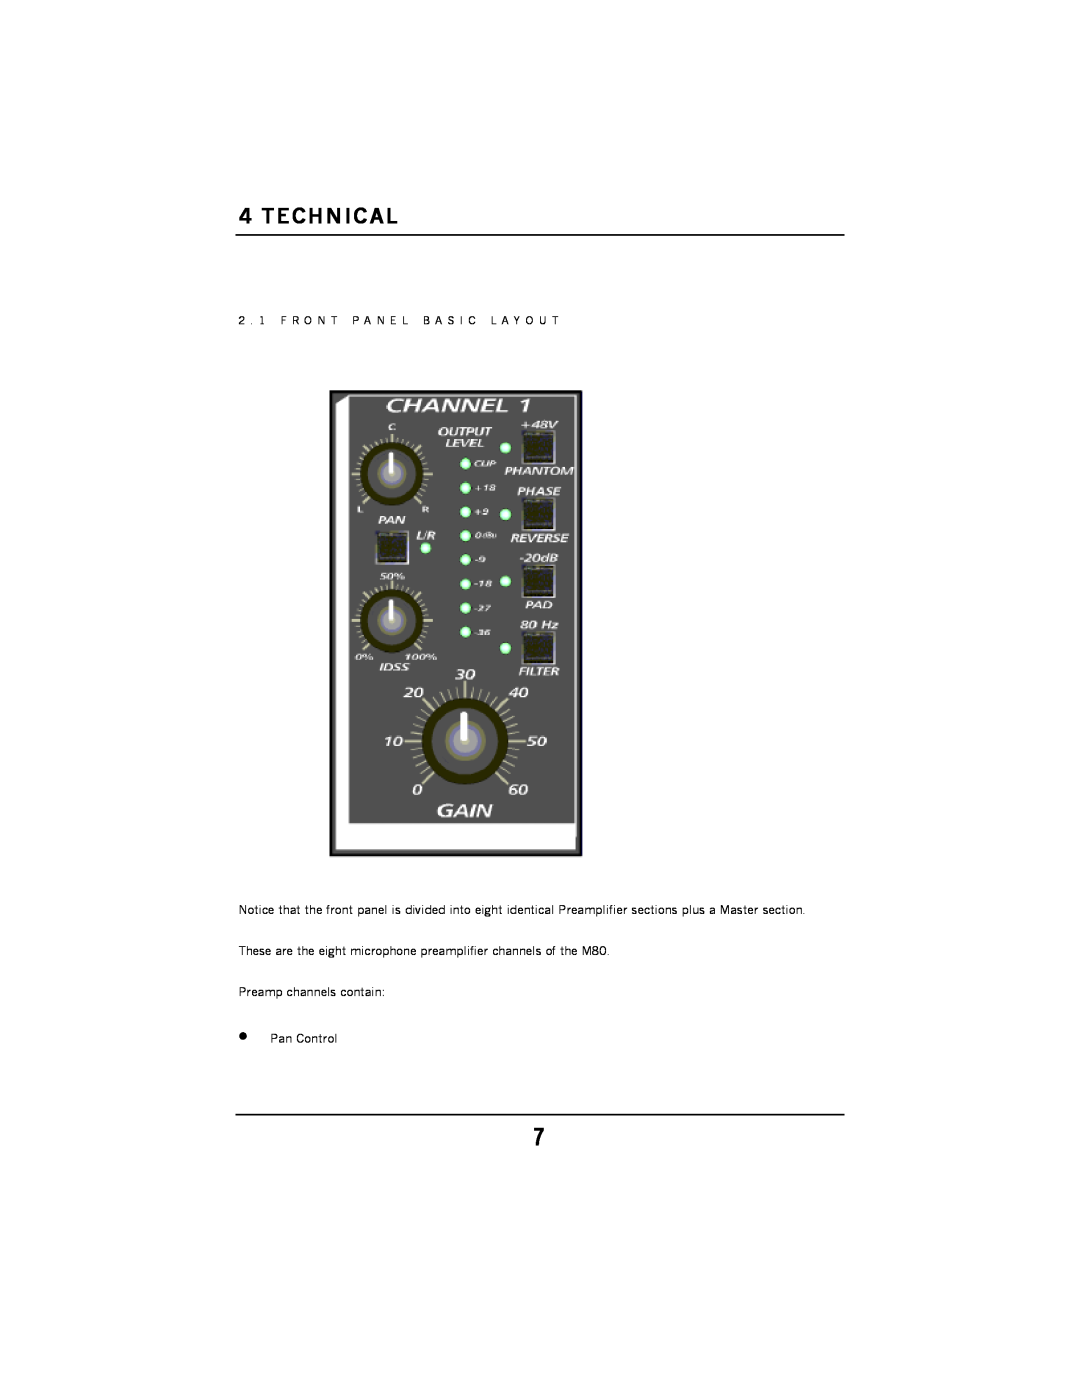 Presonus Audio electronic M80 manual Technical 